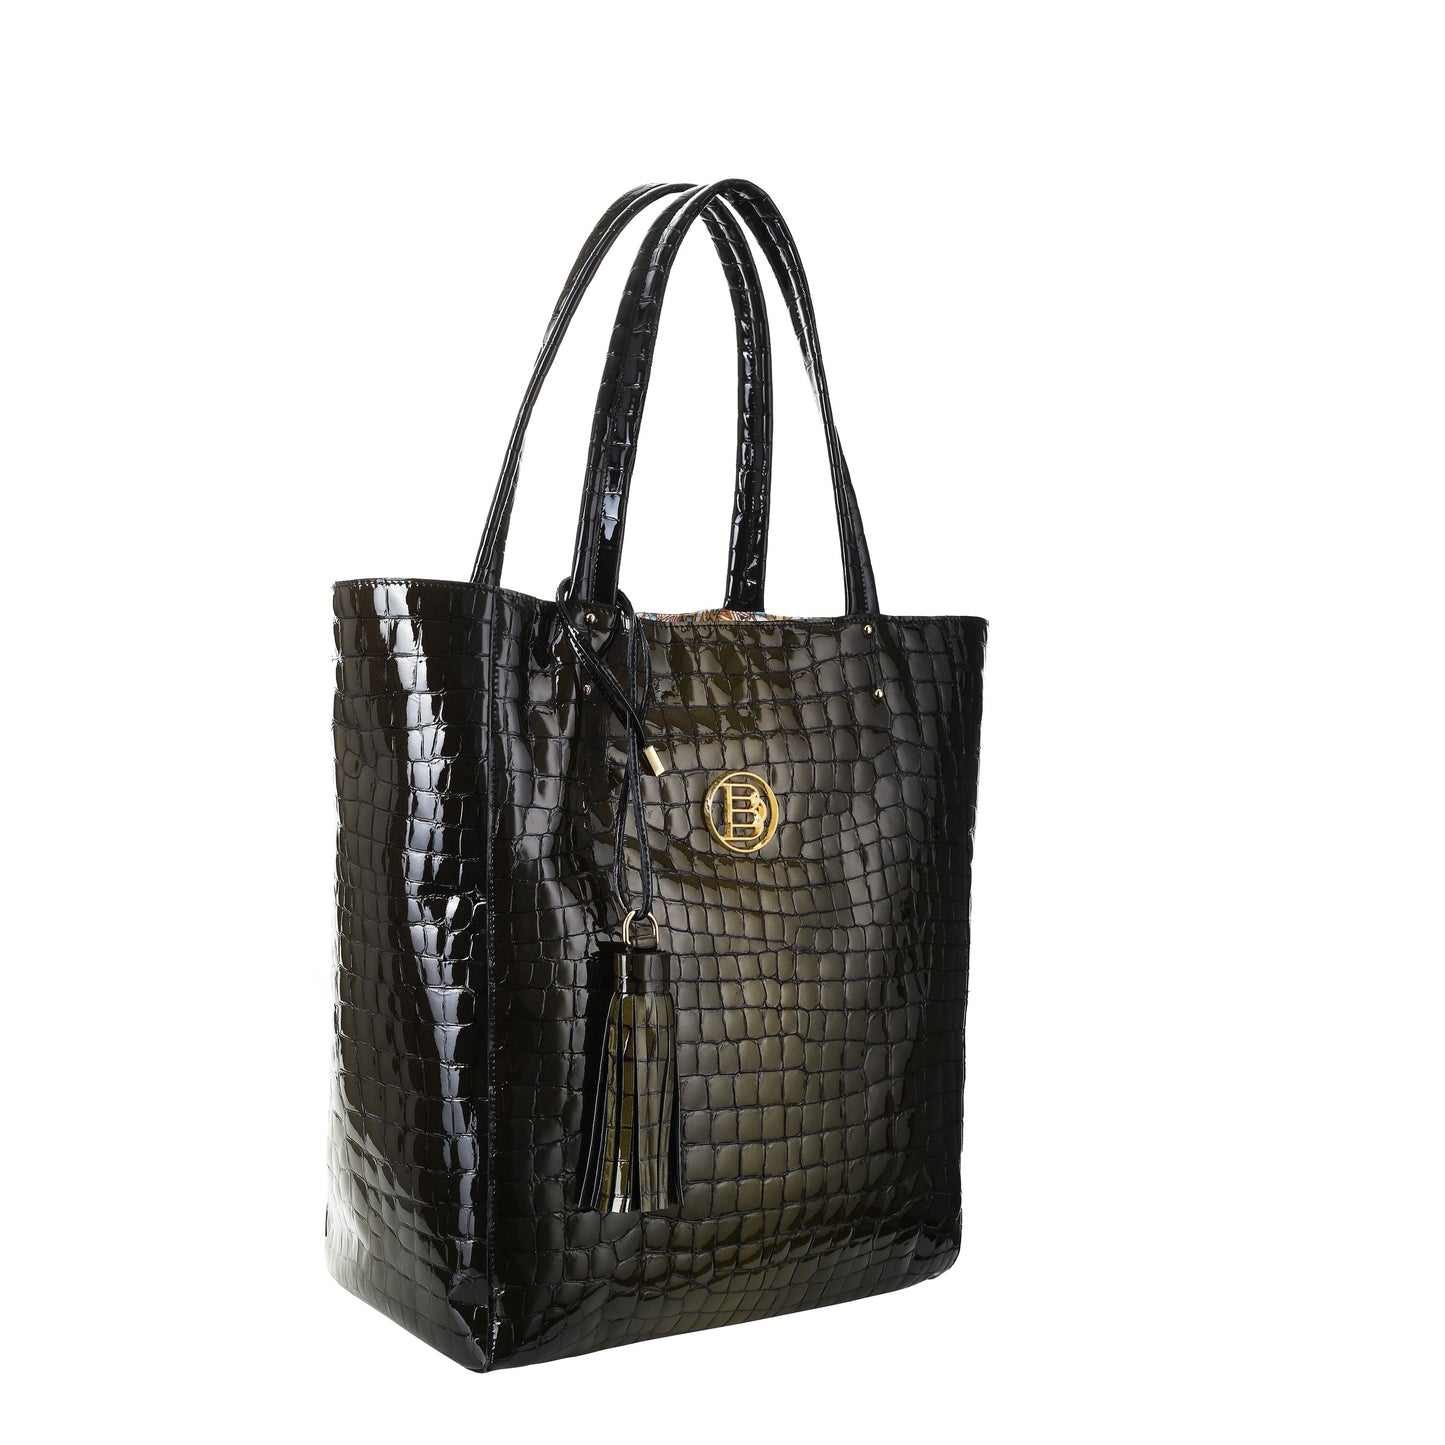 BAKU MOSAIC SHADOW OLIVE women's leather handbag